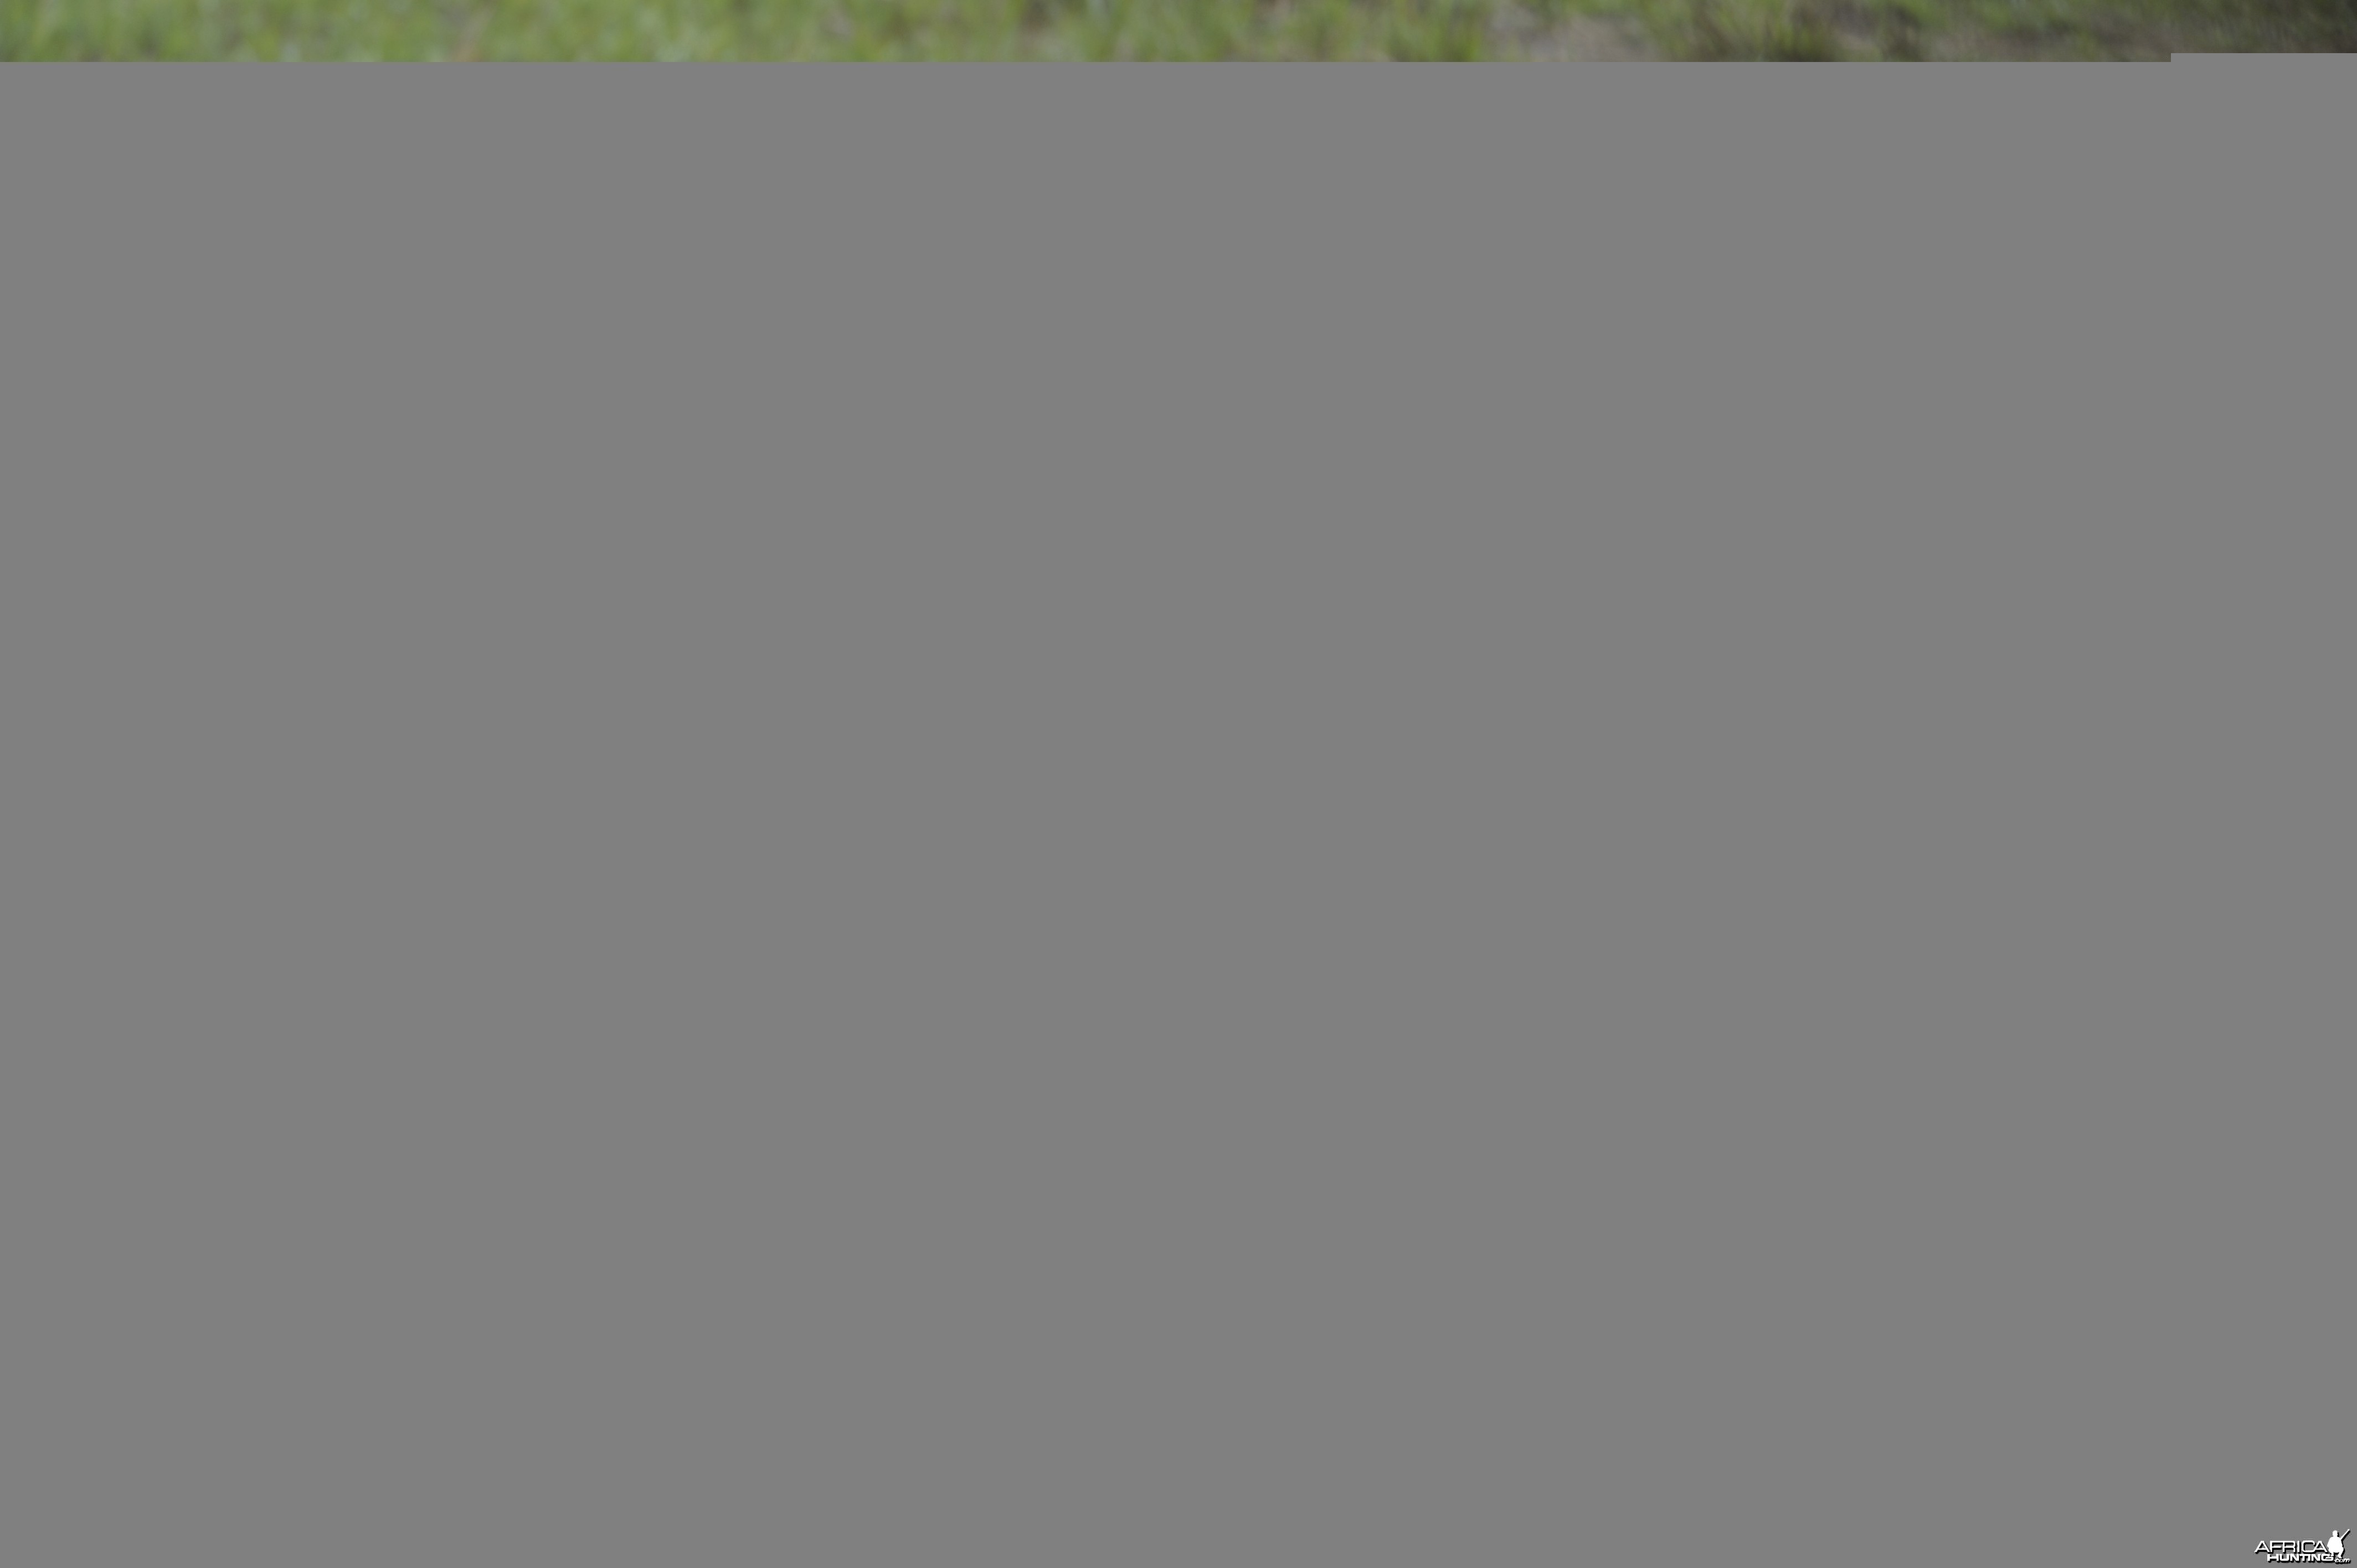 Lelwel Hartebeest in Central African Republic